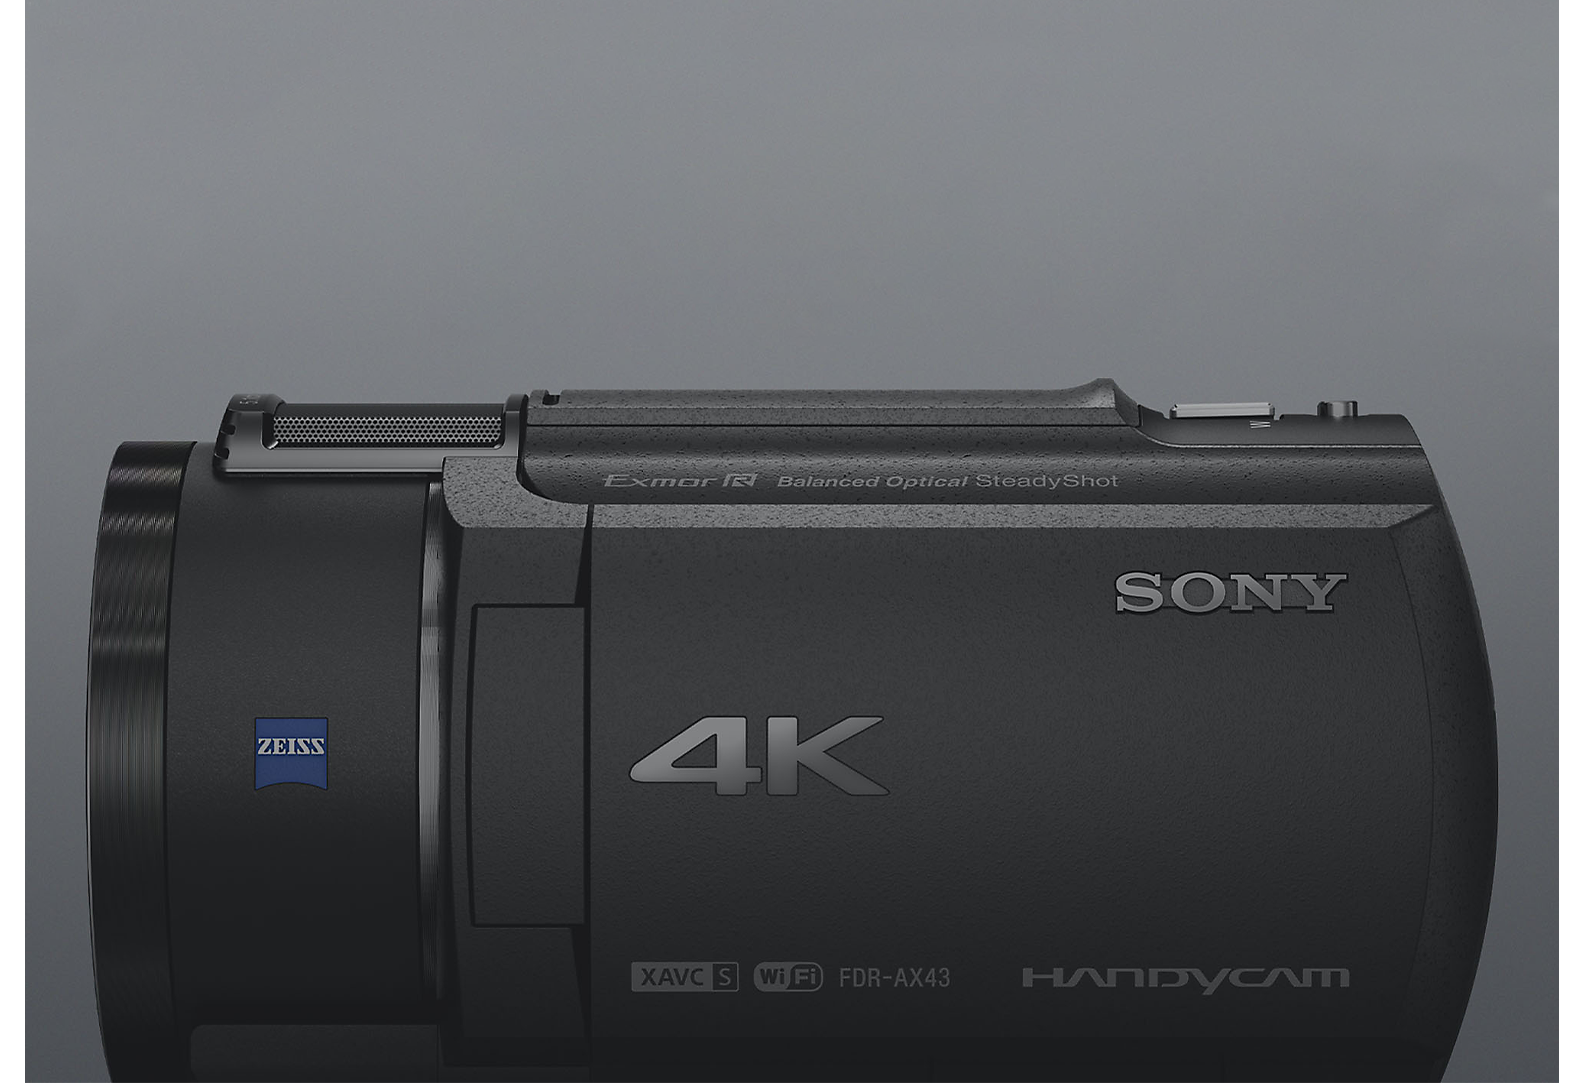 Tampak samping camcorder Handycam® 4K Sony